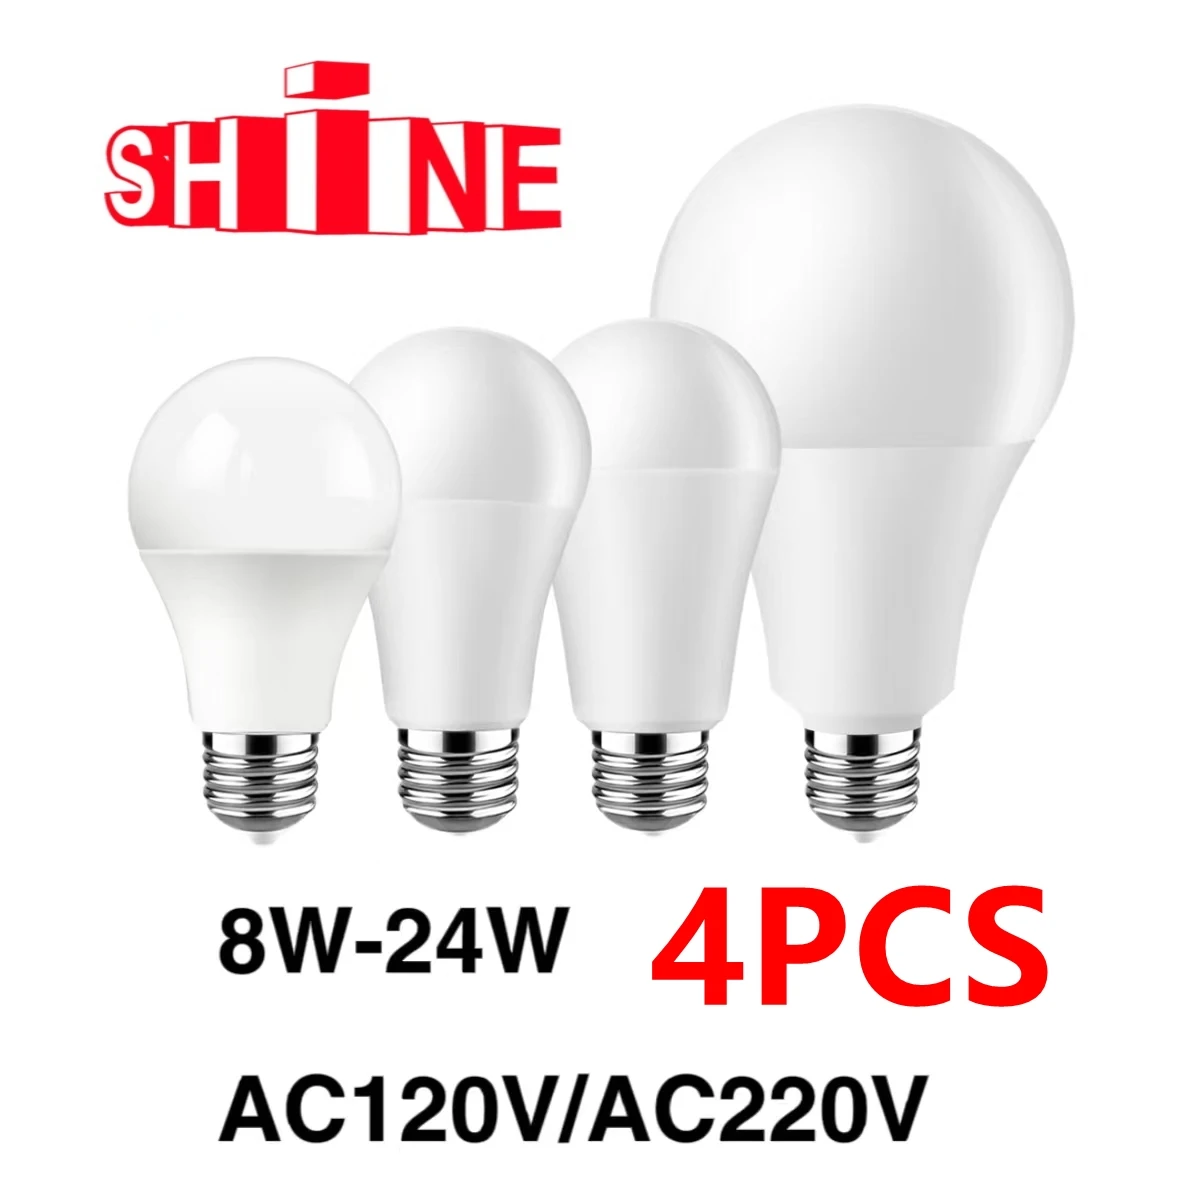 4pcs LED energy-saving bulb 8W-24W AC110V 220V no flickering warm white light E27 B22 is suitable for kitchen study